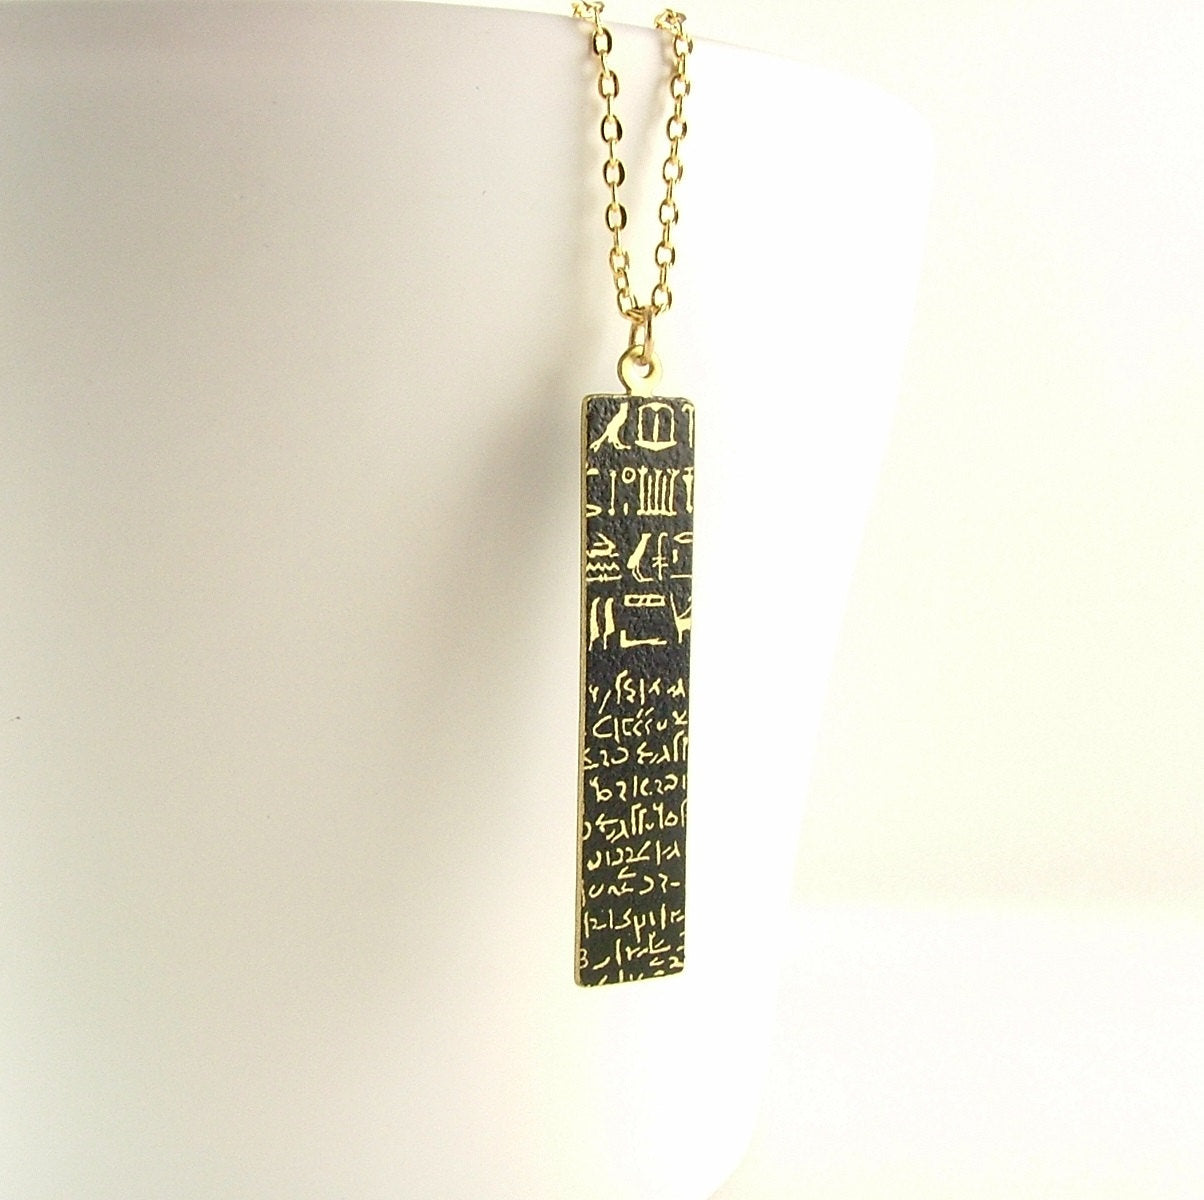 Rosetta Stone Necklace